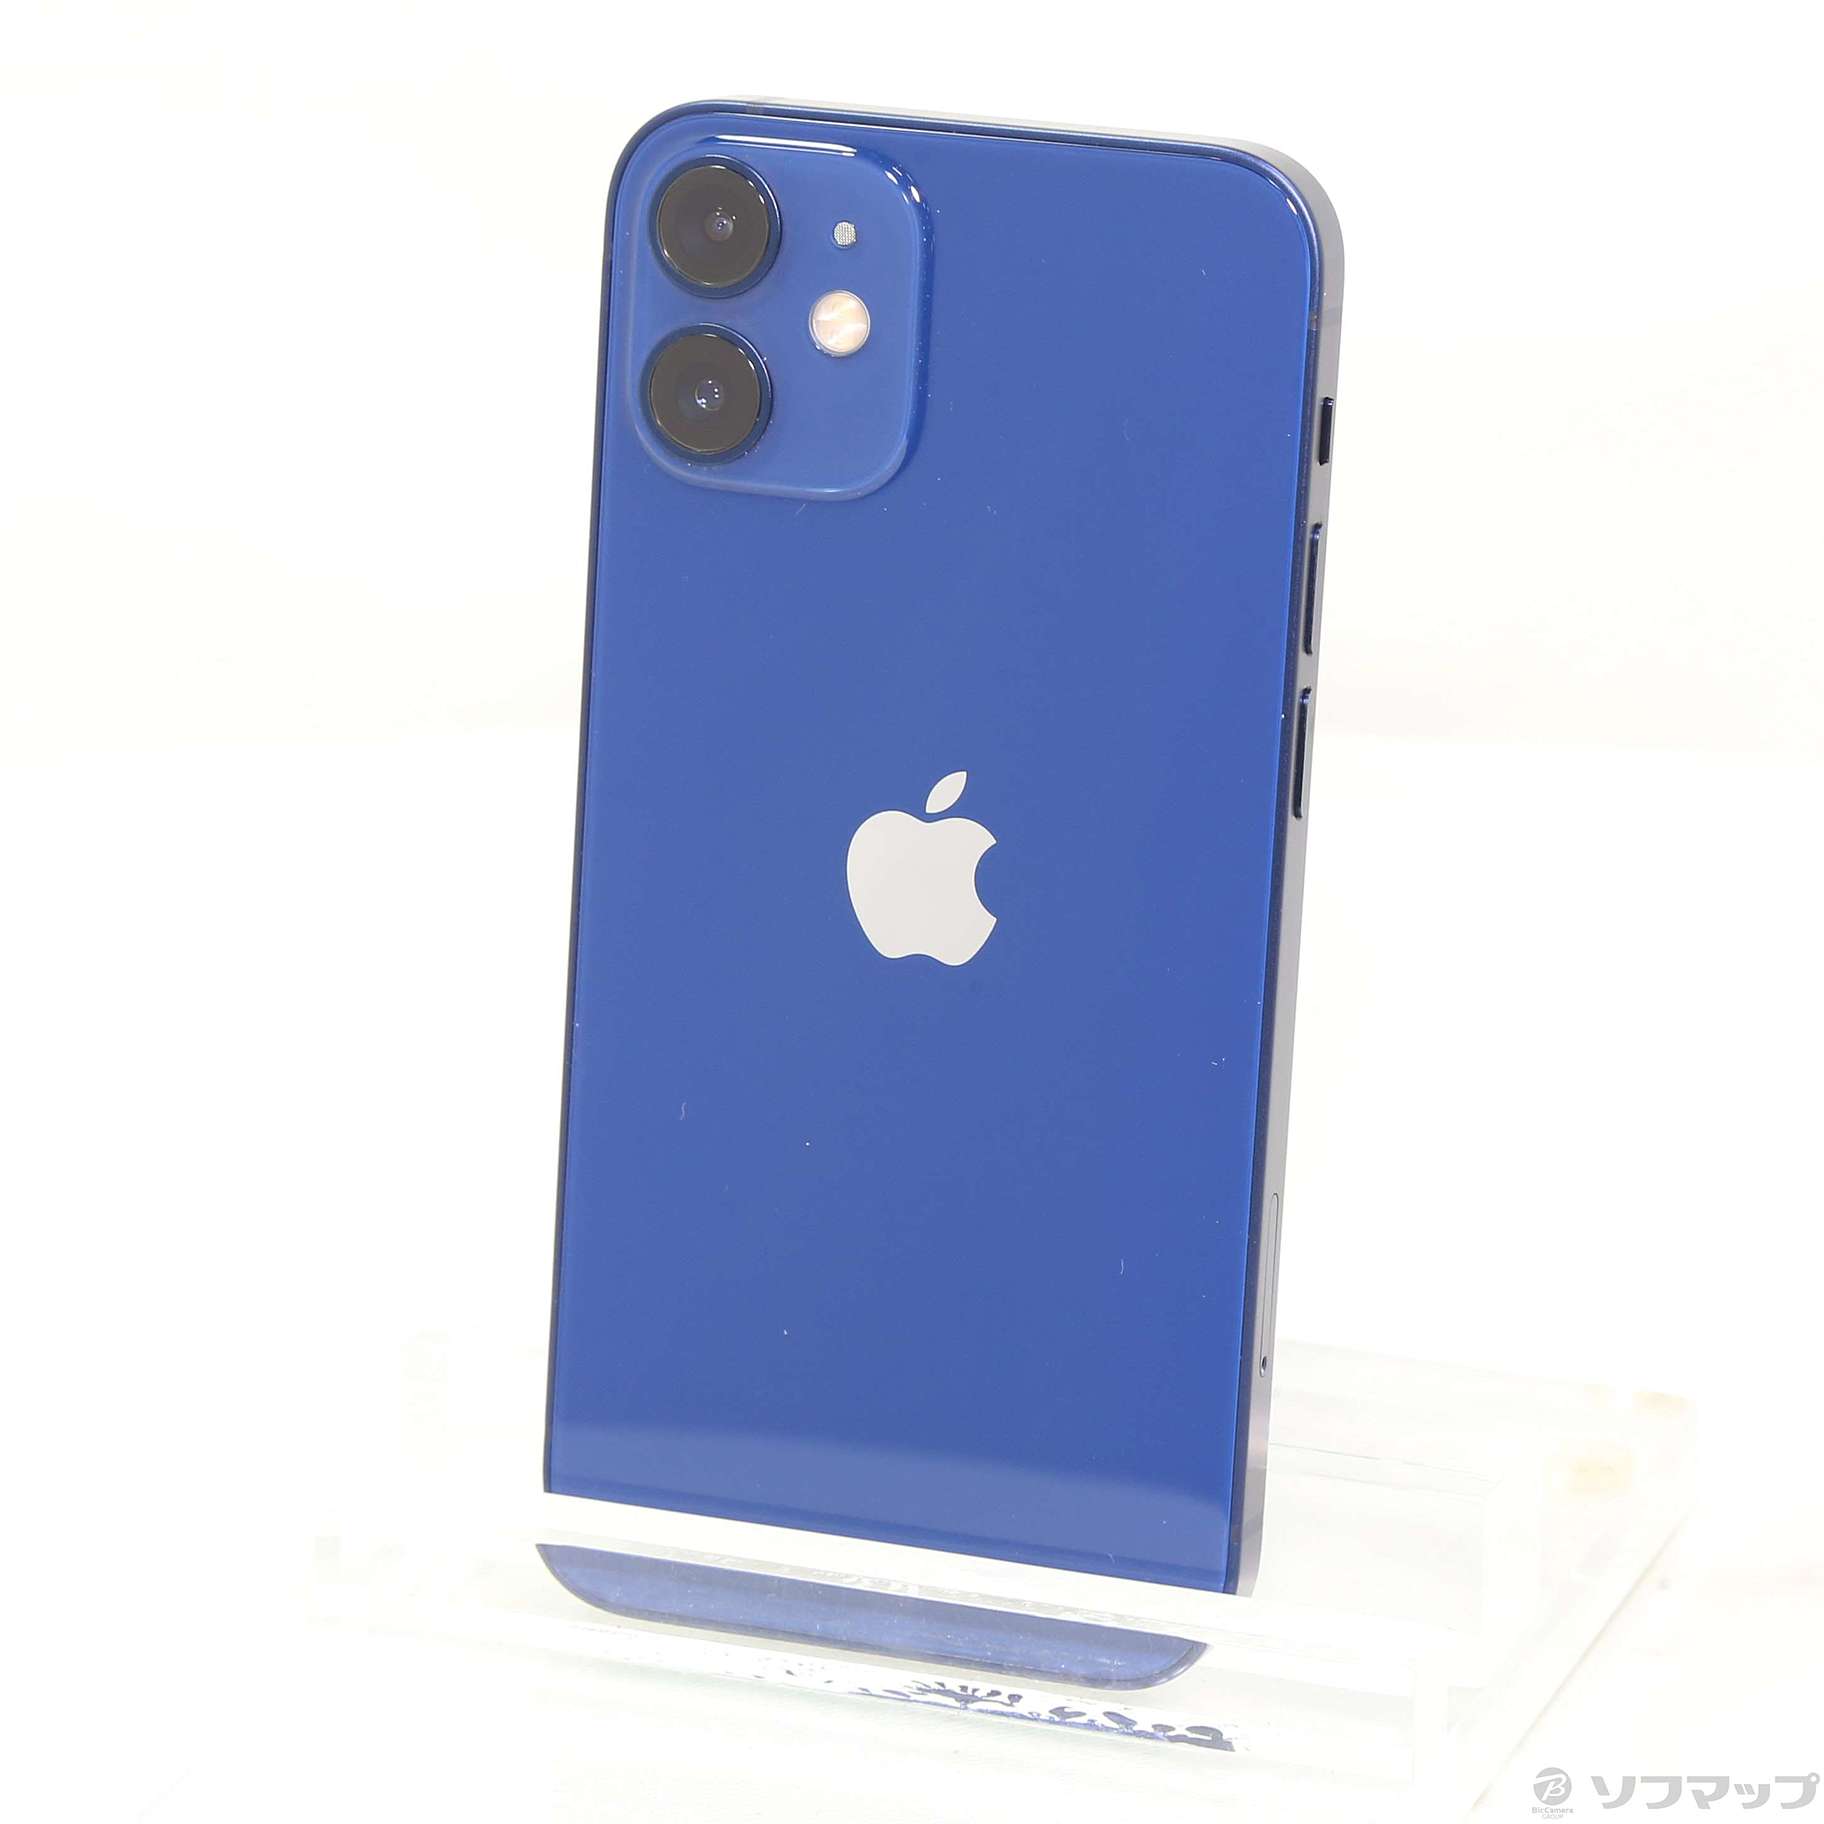 Apple iPhone12 mini 64GB SIMフリー ブルー - スマートフォン本体